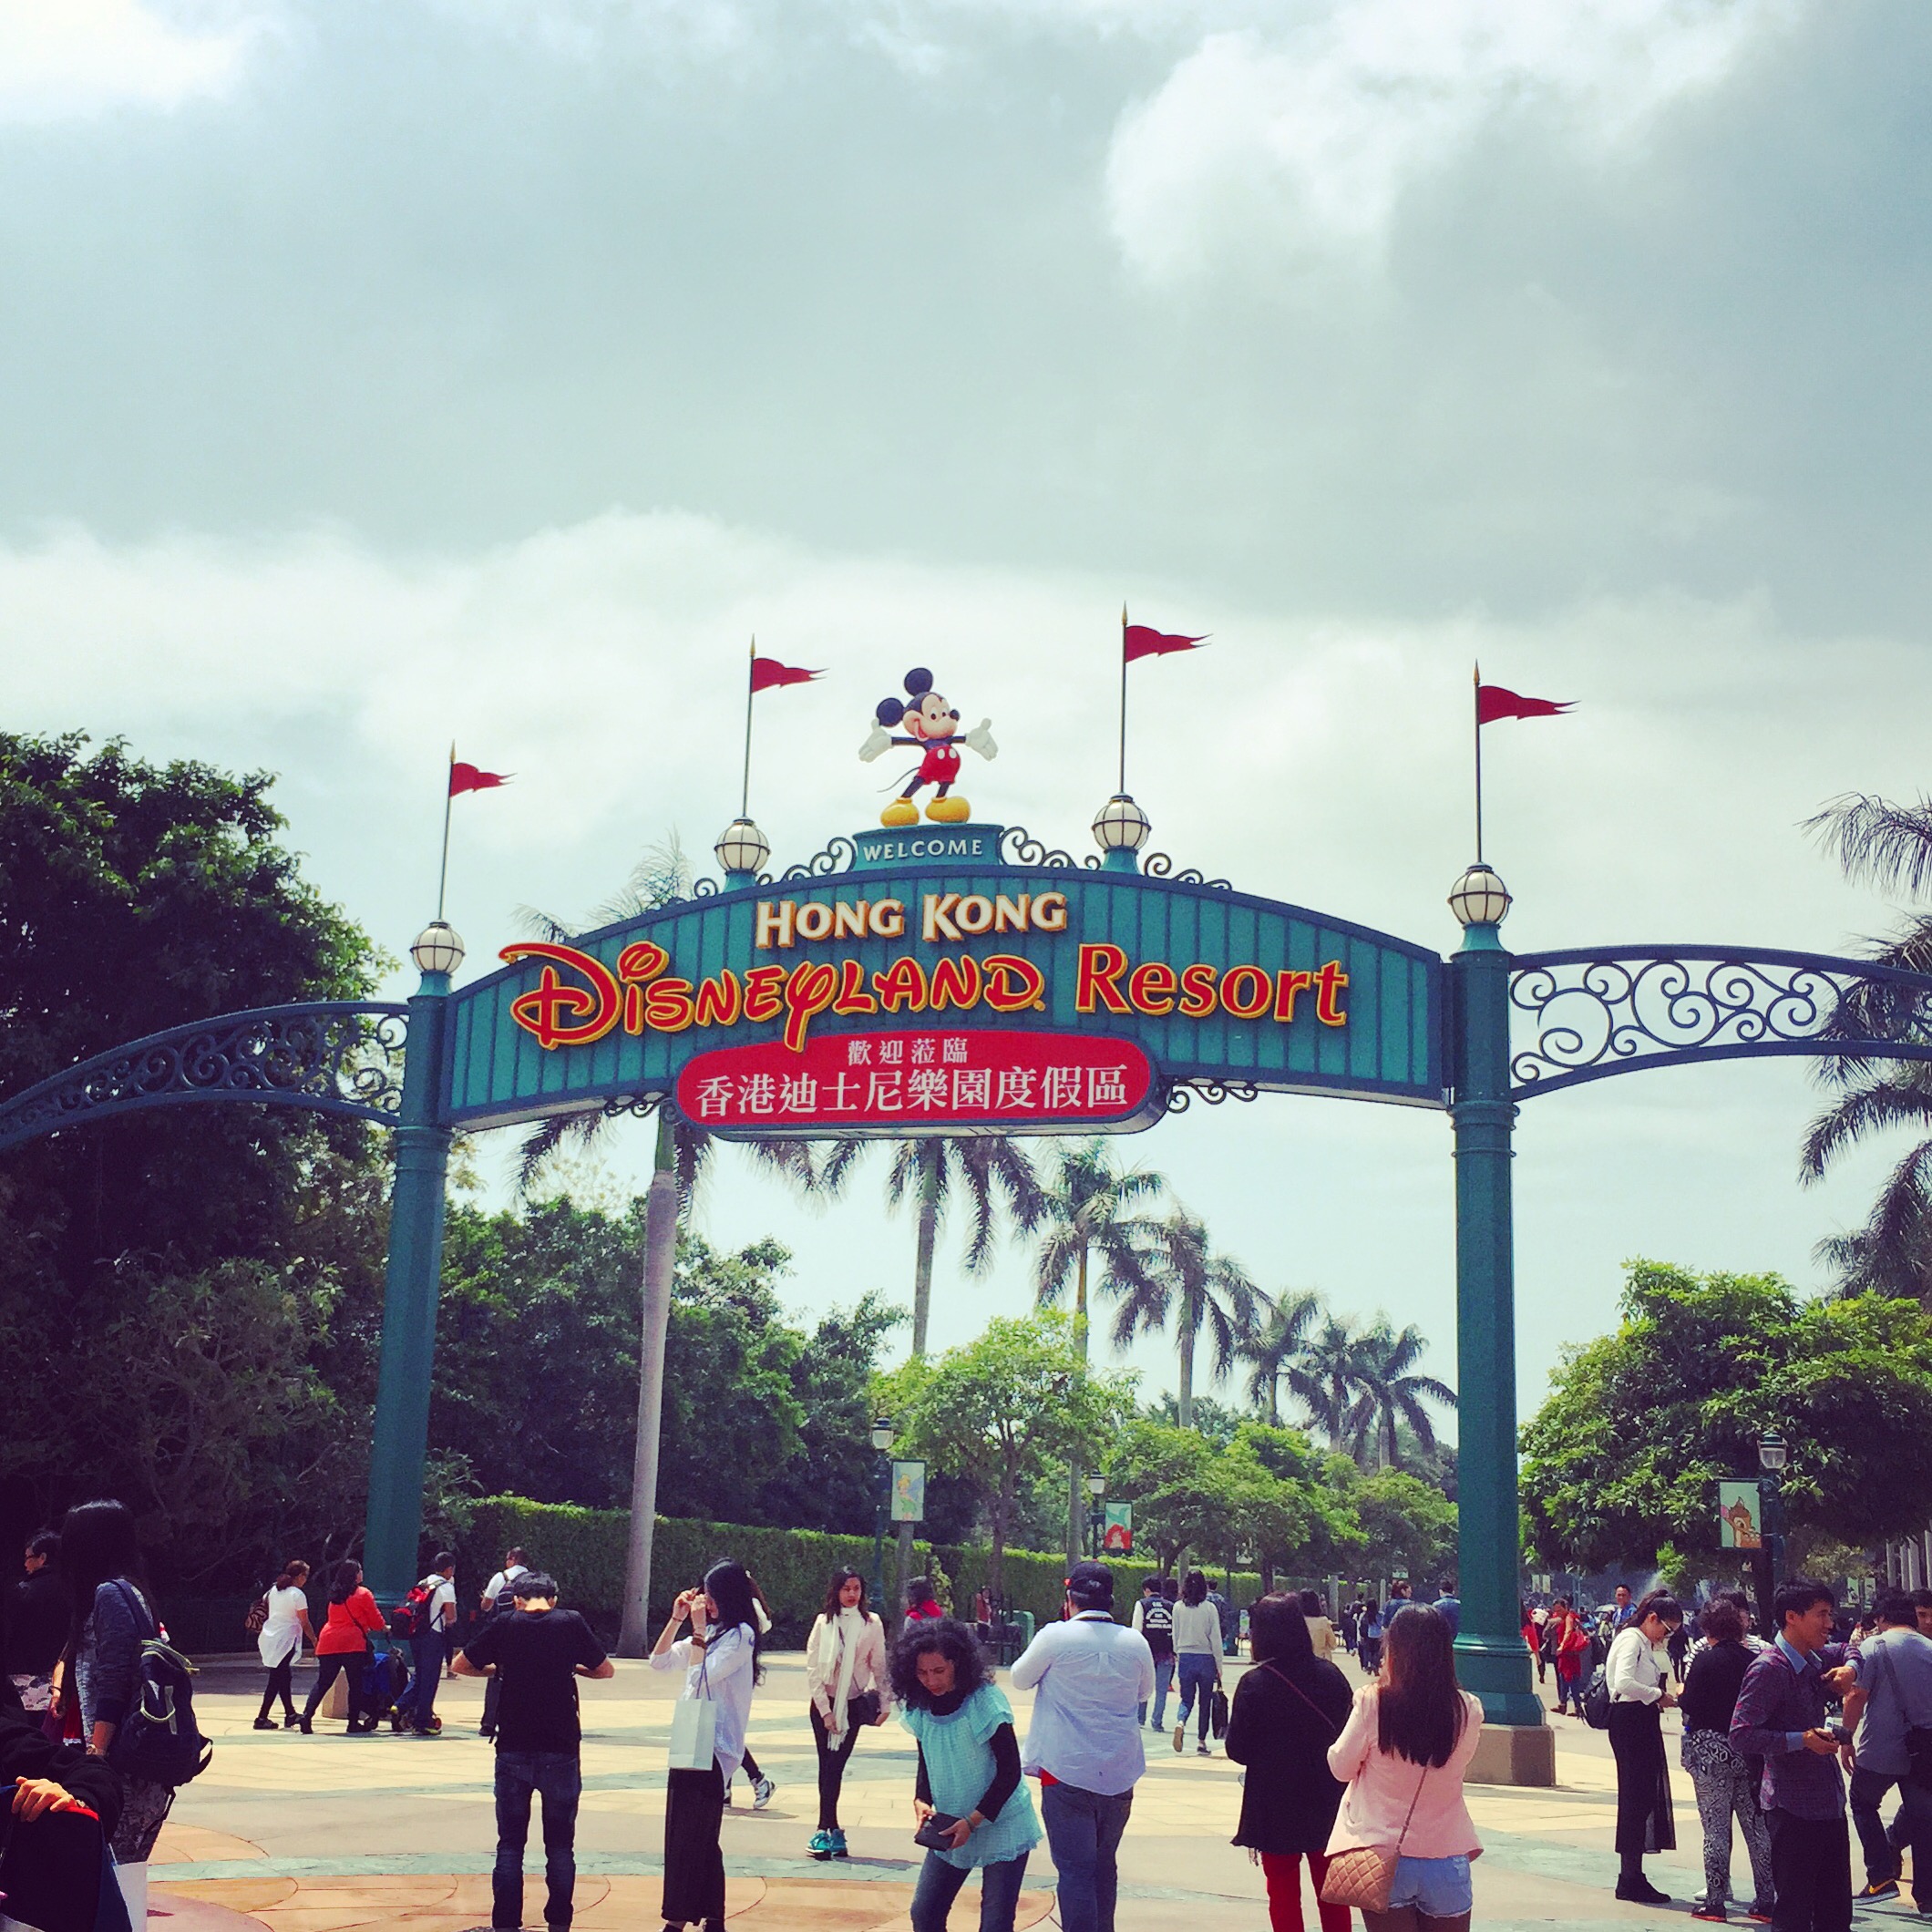 Hong Kong Disneyland: Giving Shanghai theme park penis envy since 2005